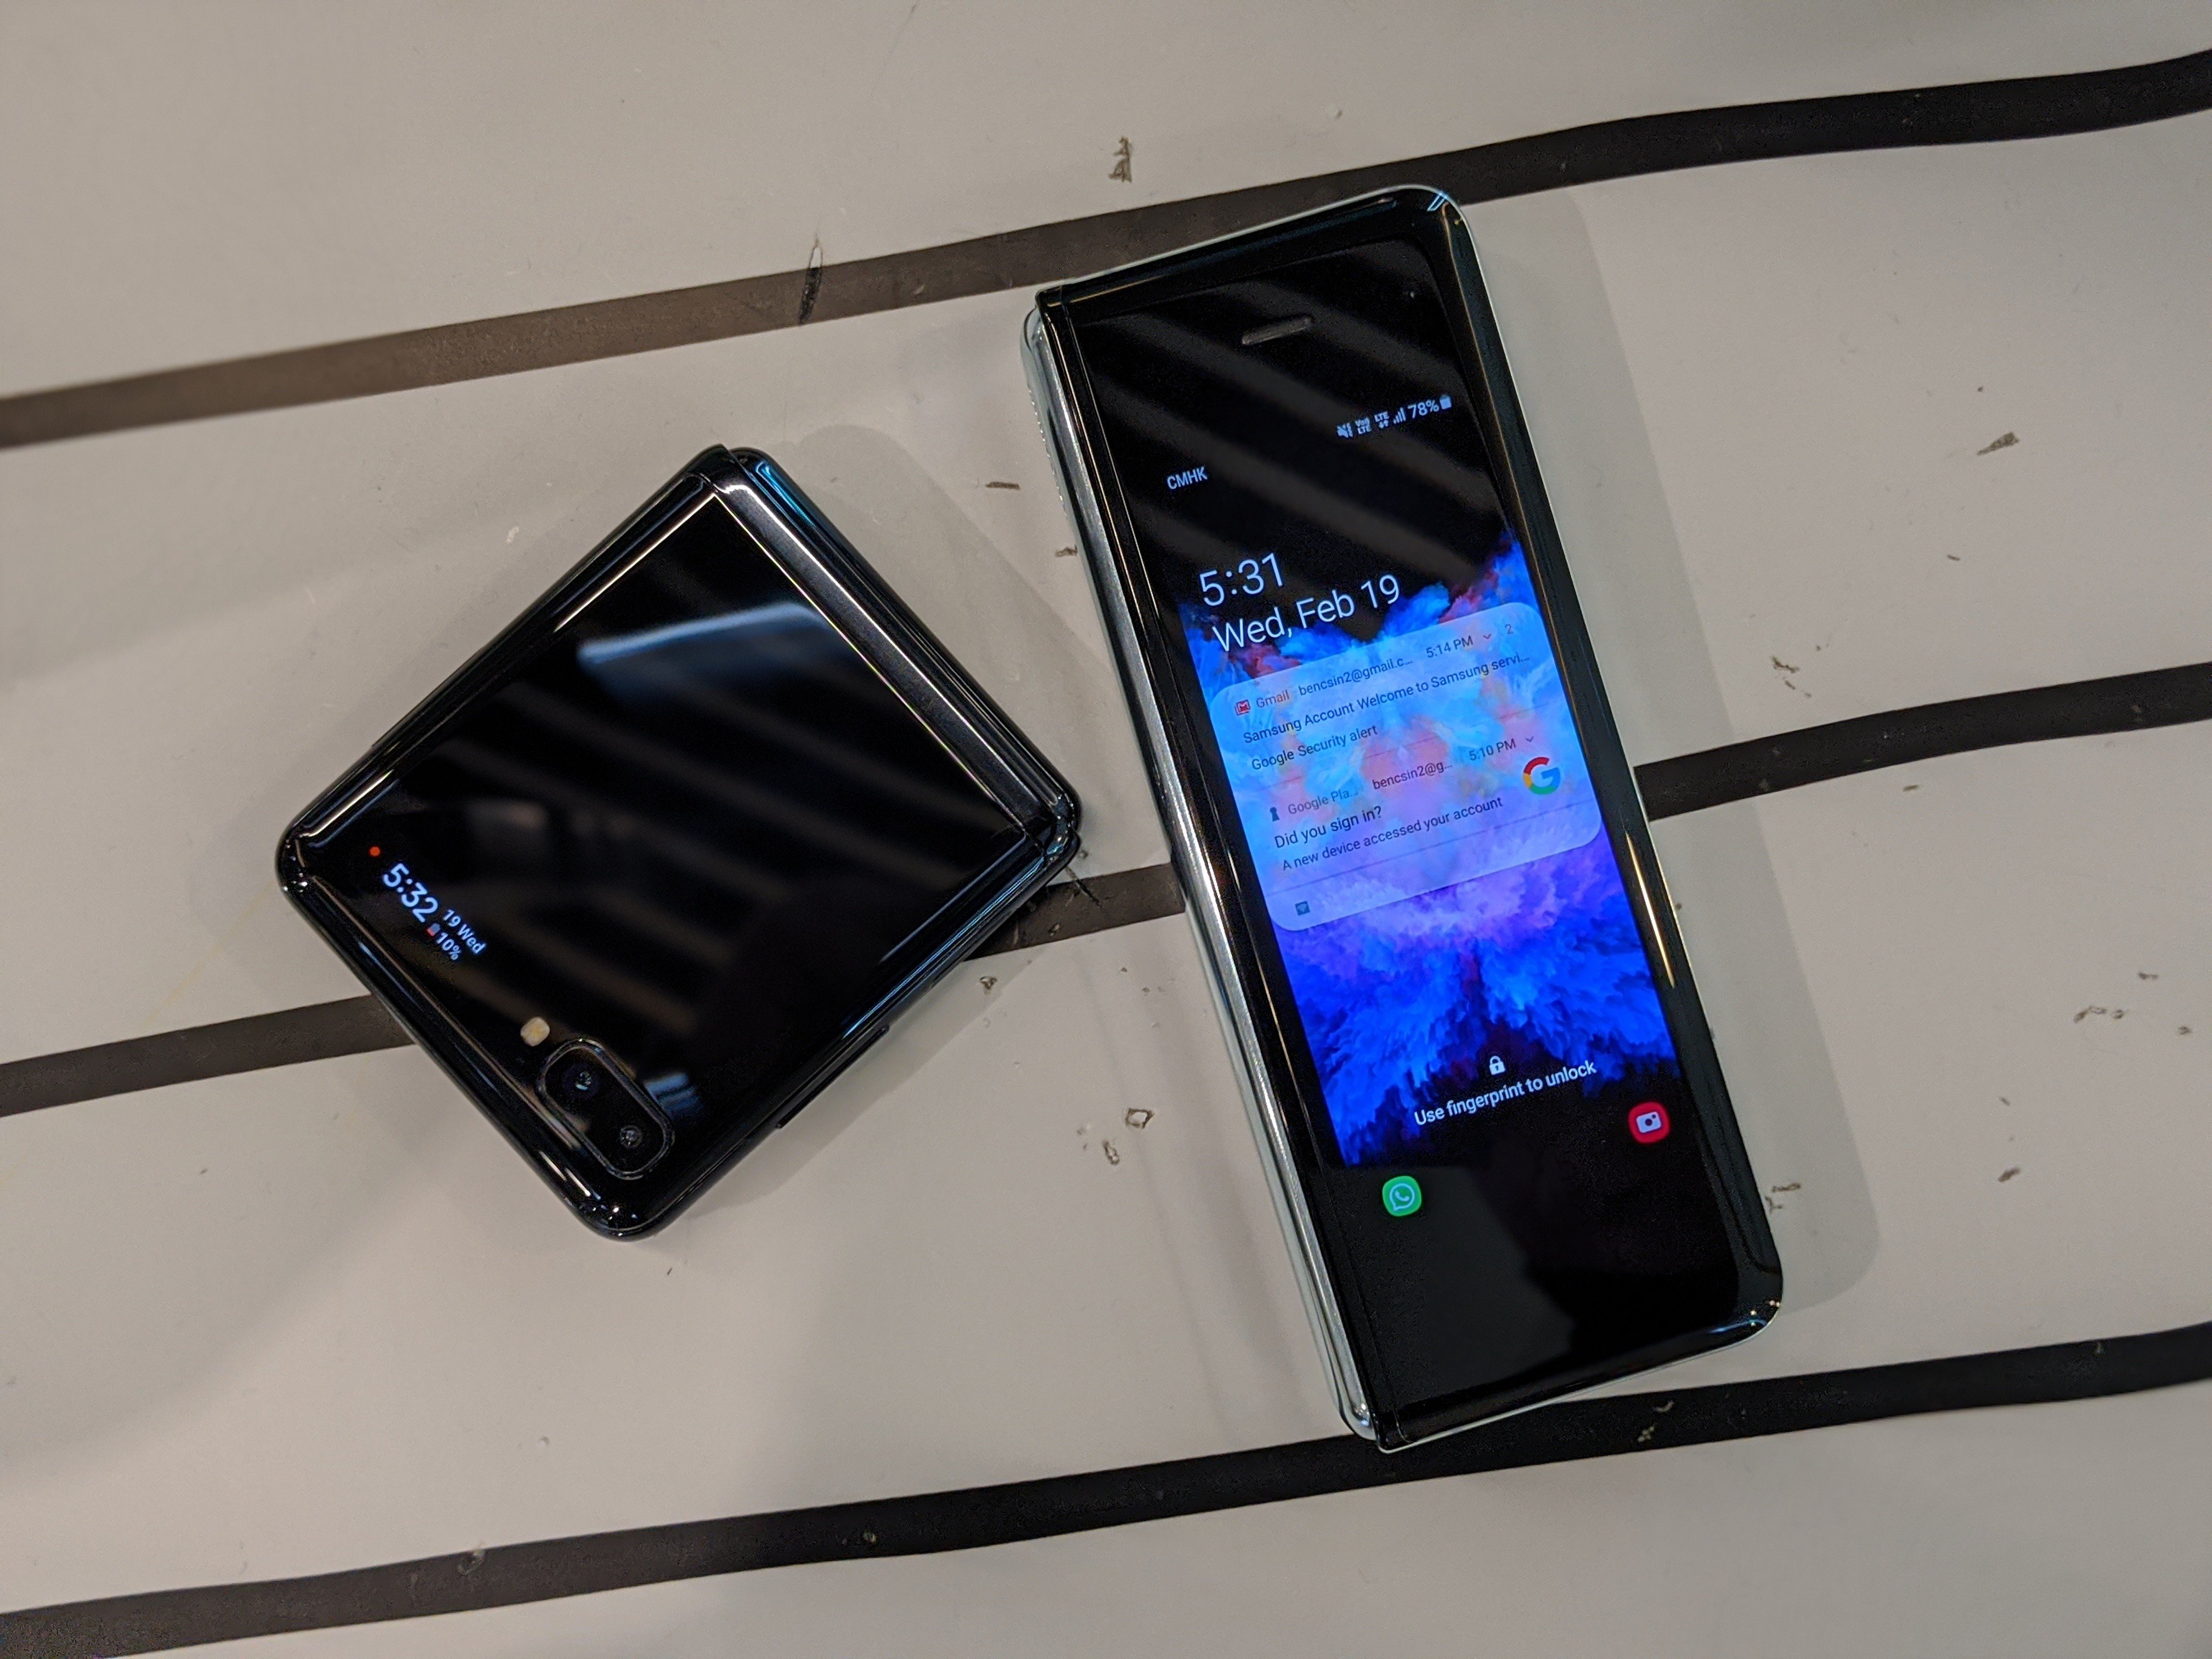 Samsung Galaxy Z Flip Smartphone with a Snapdragon 855+ processor